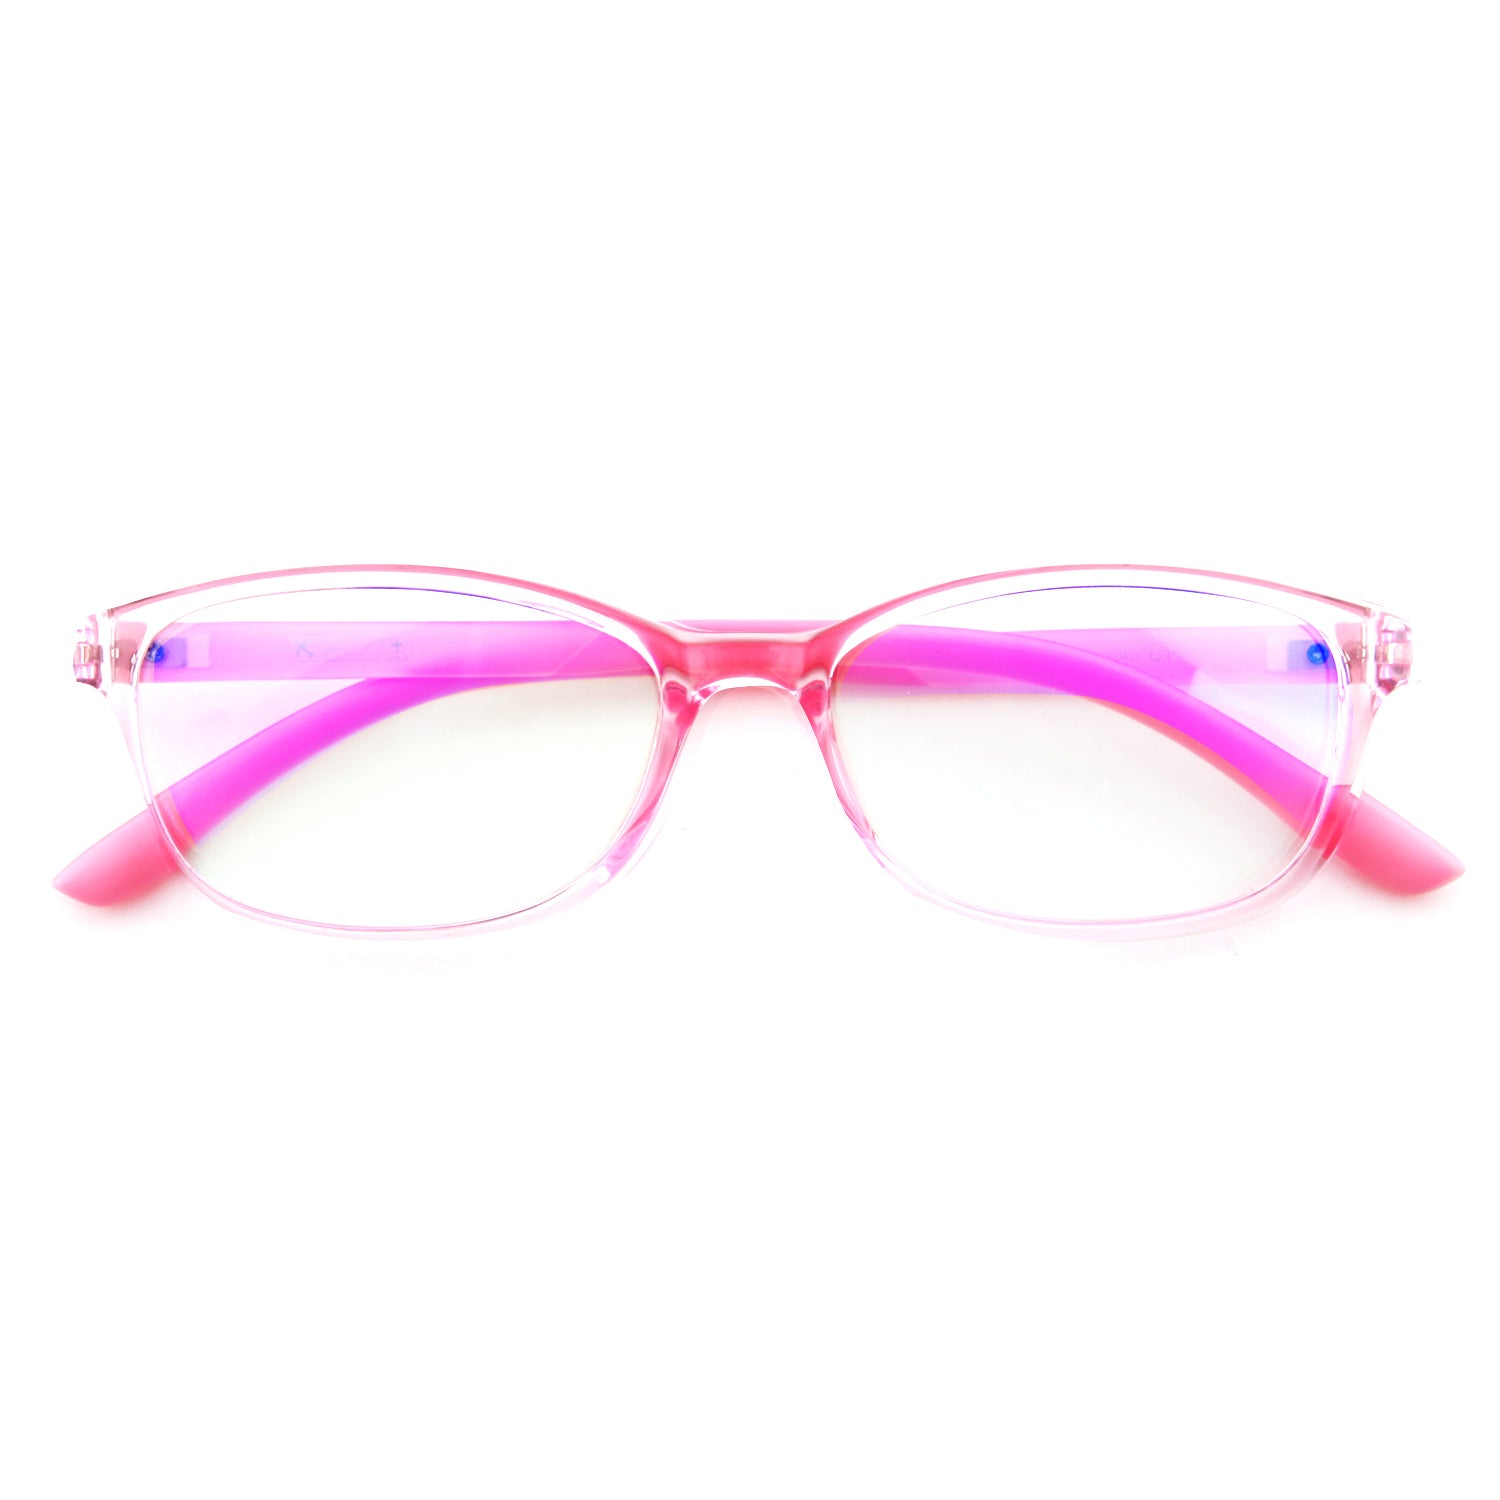 Mind Bridge Big Kids and Teens Computer Glasses (Pink) - CrystalHillGlasses.com